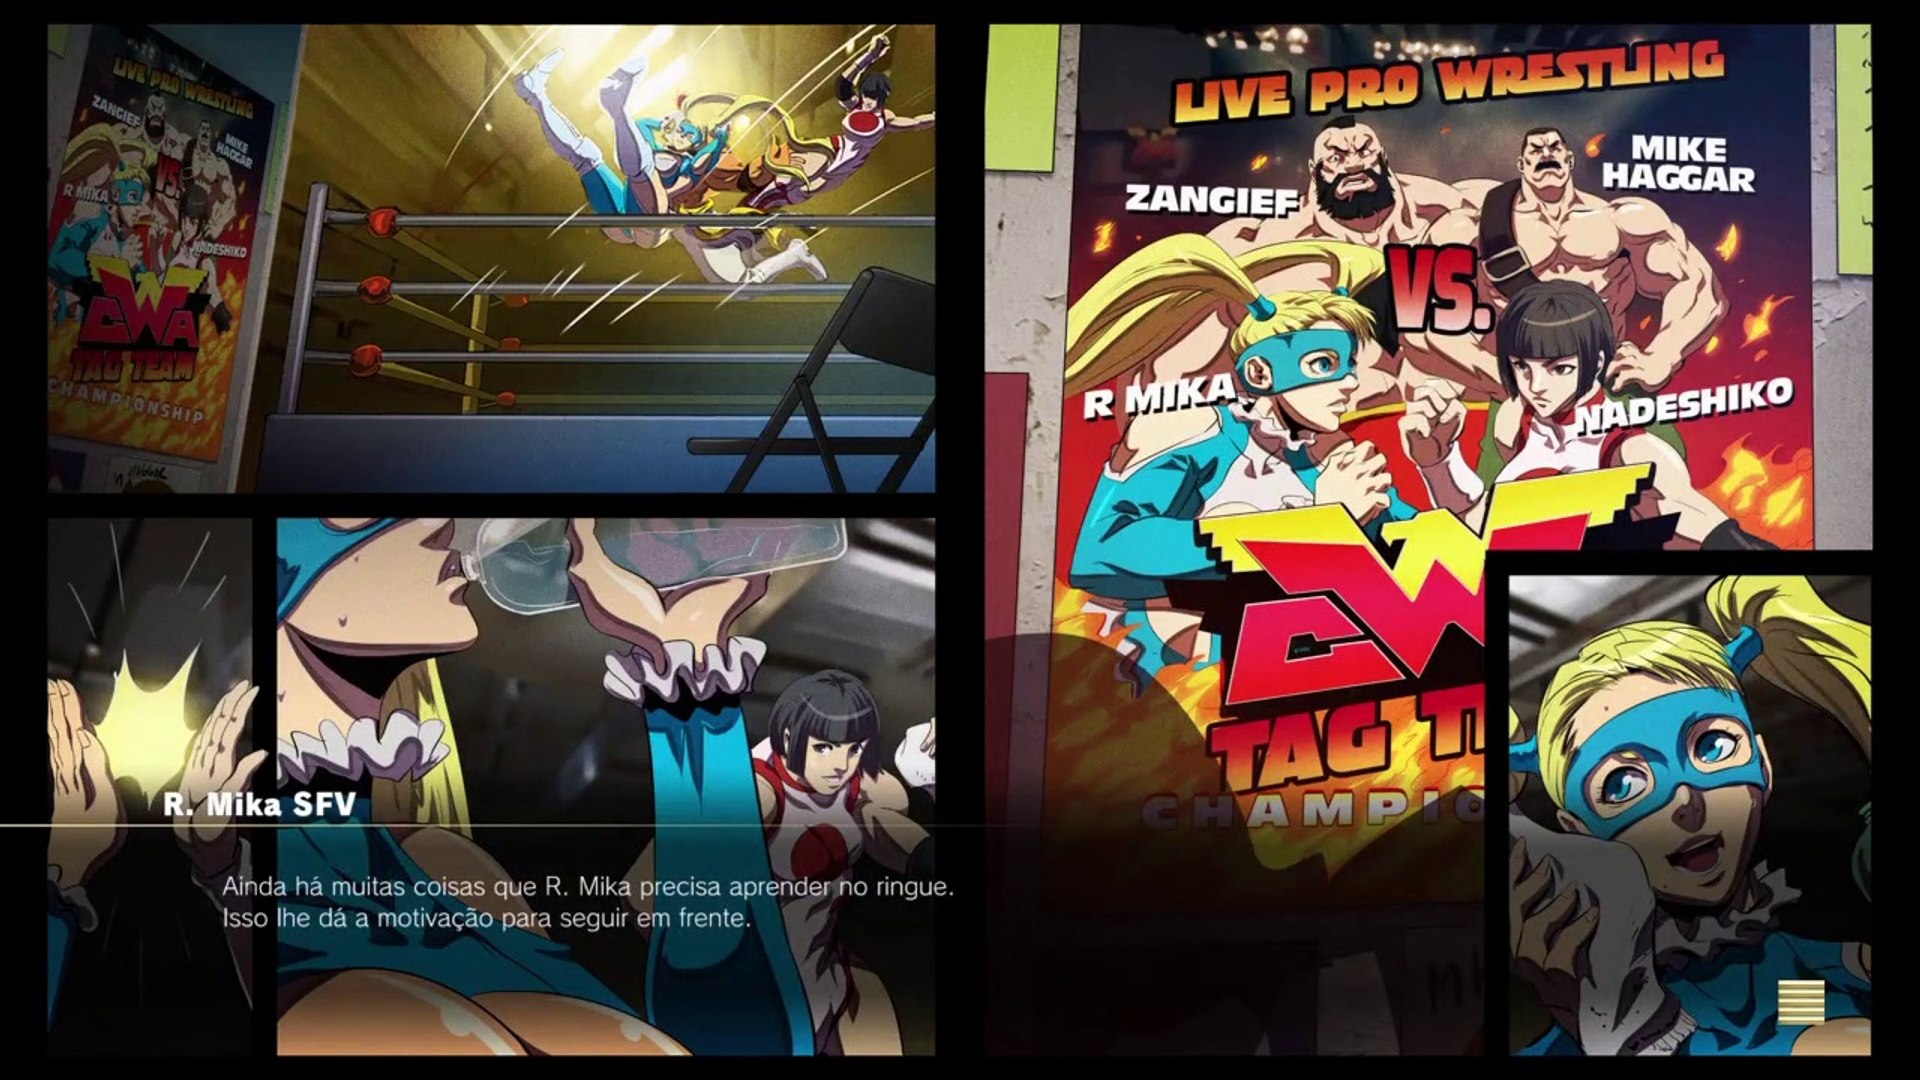 Street Fighter V - Arcade Mode - Vega - Hardest - SFA Route - video  Dailymotion